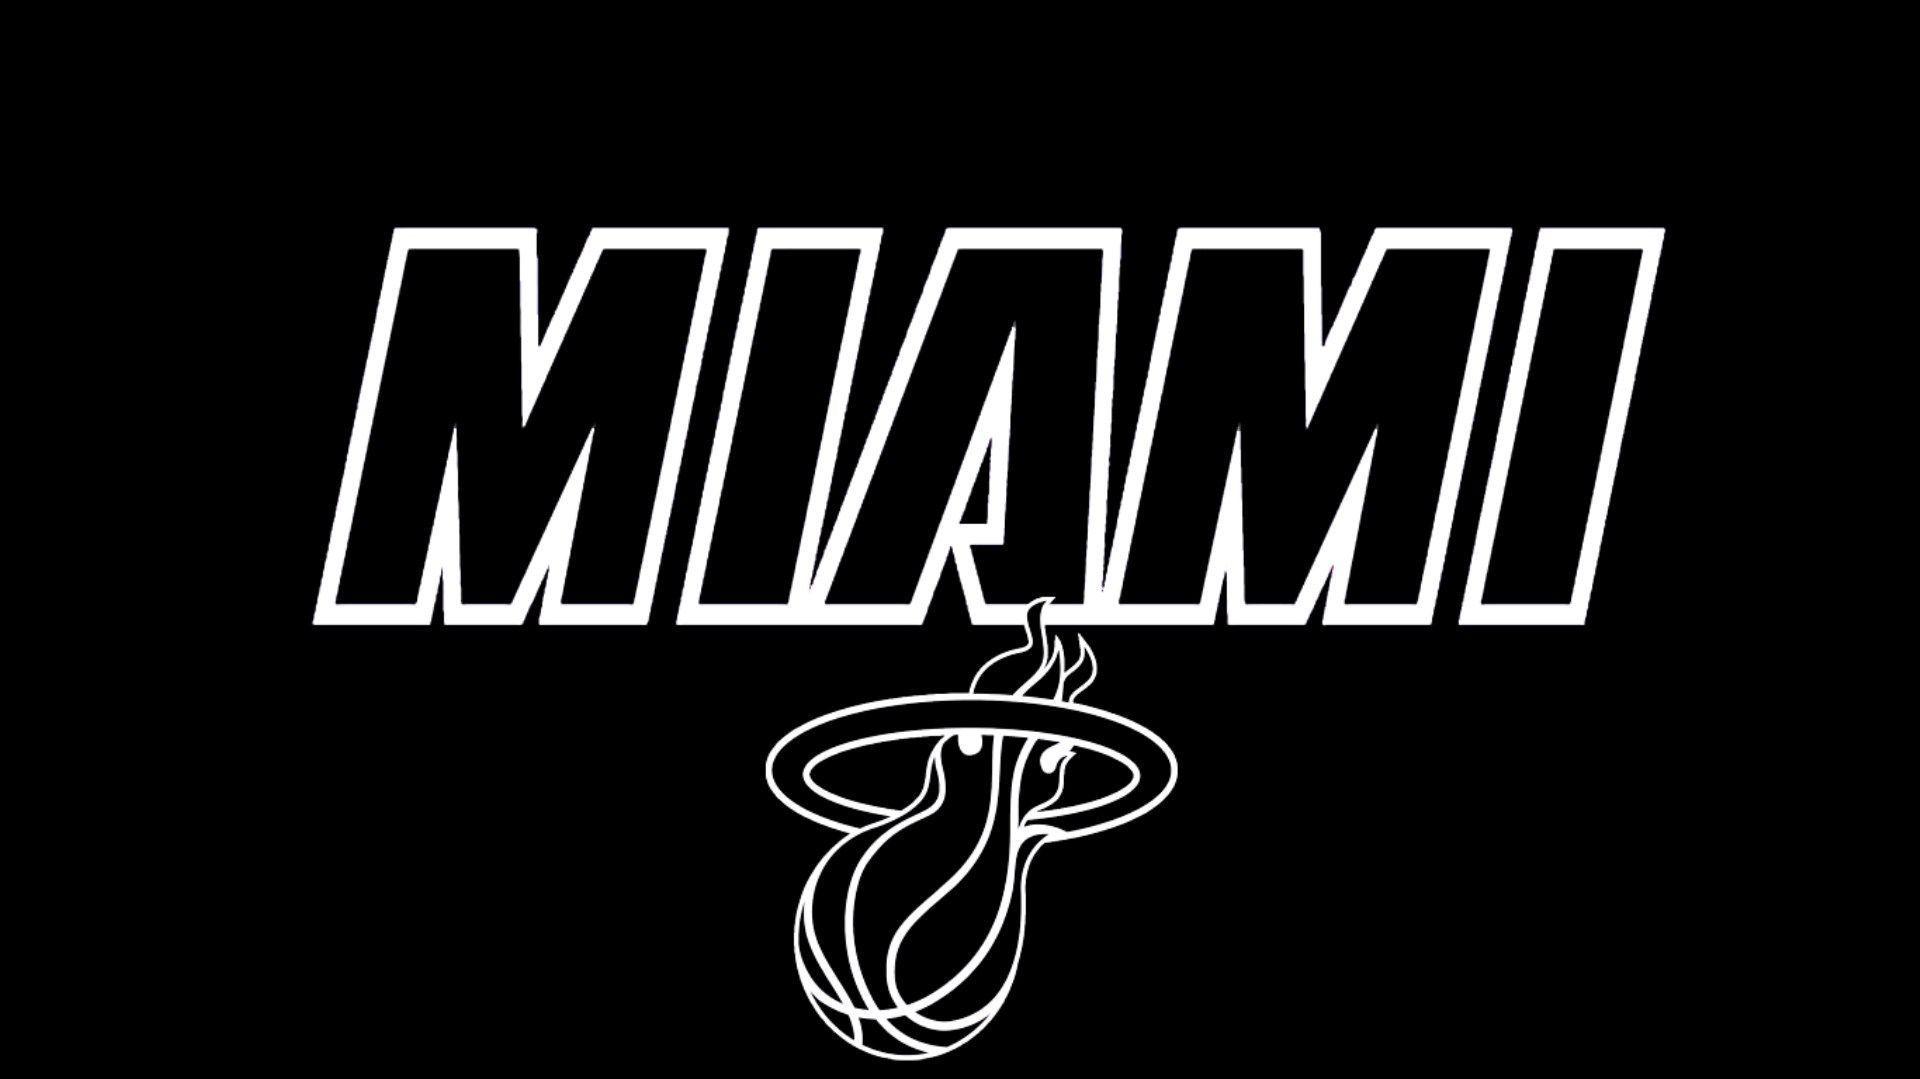 Logo Miami Heat Wallpaper. Wallpaper, Background, Image, Art